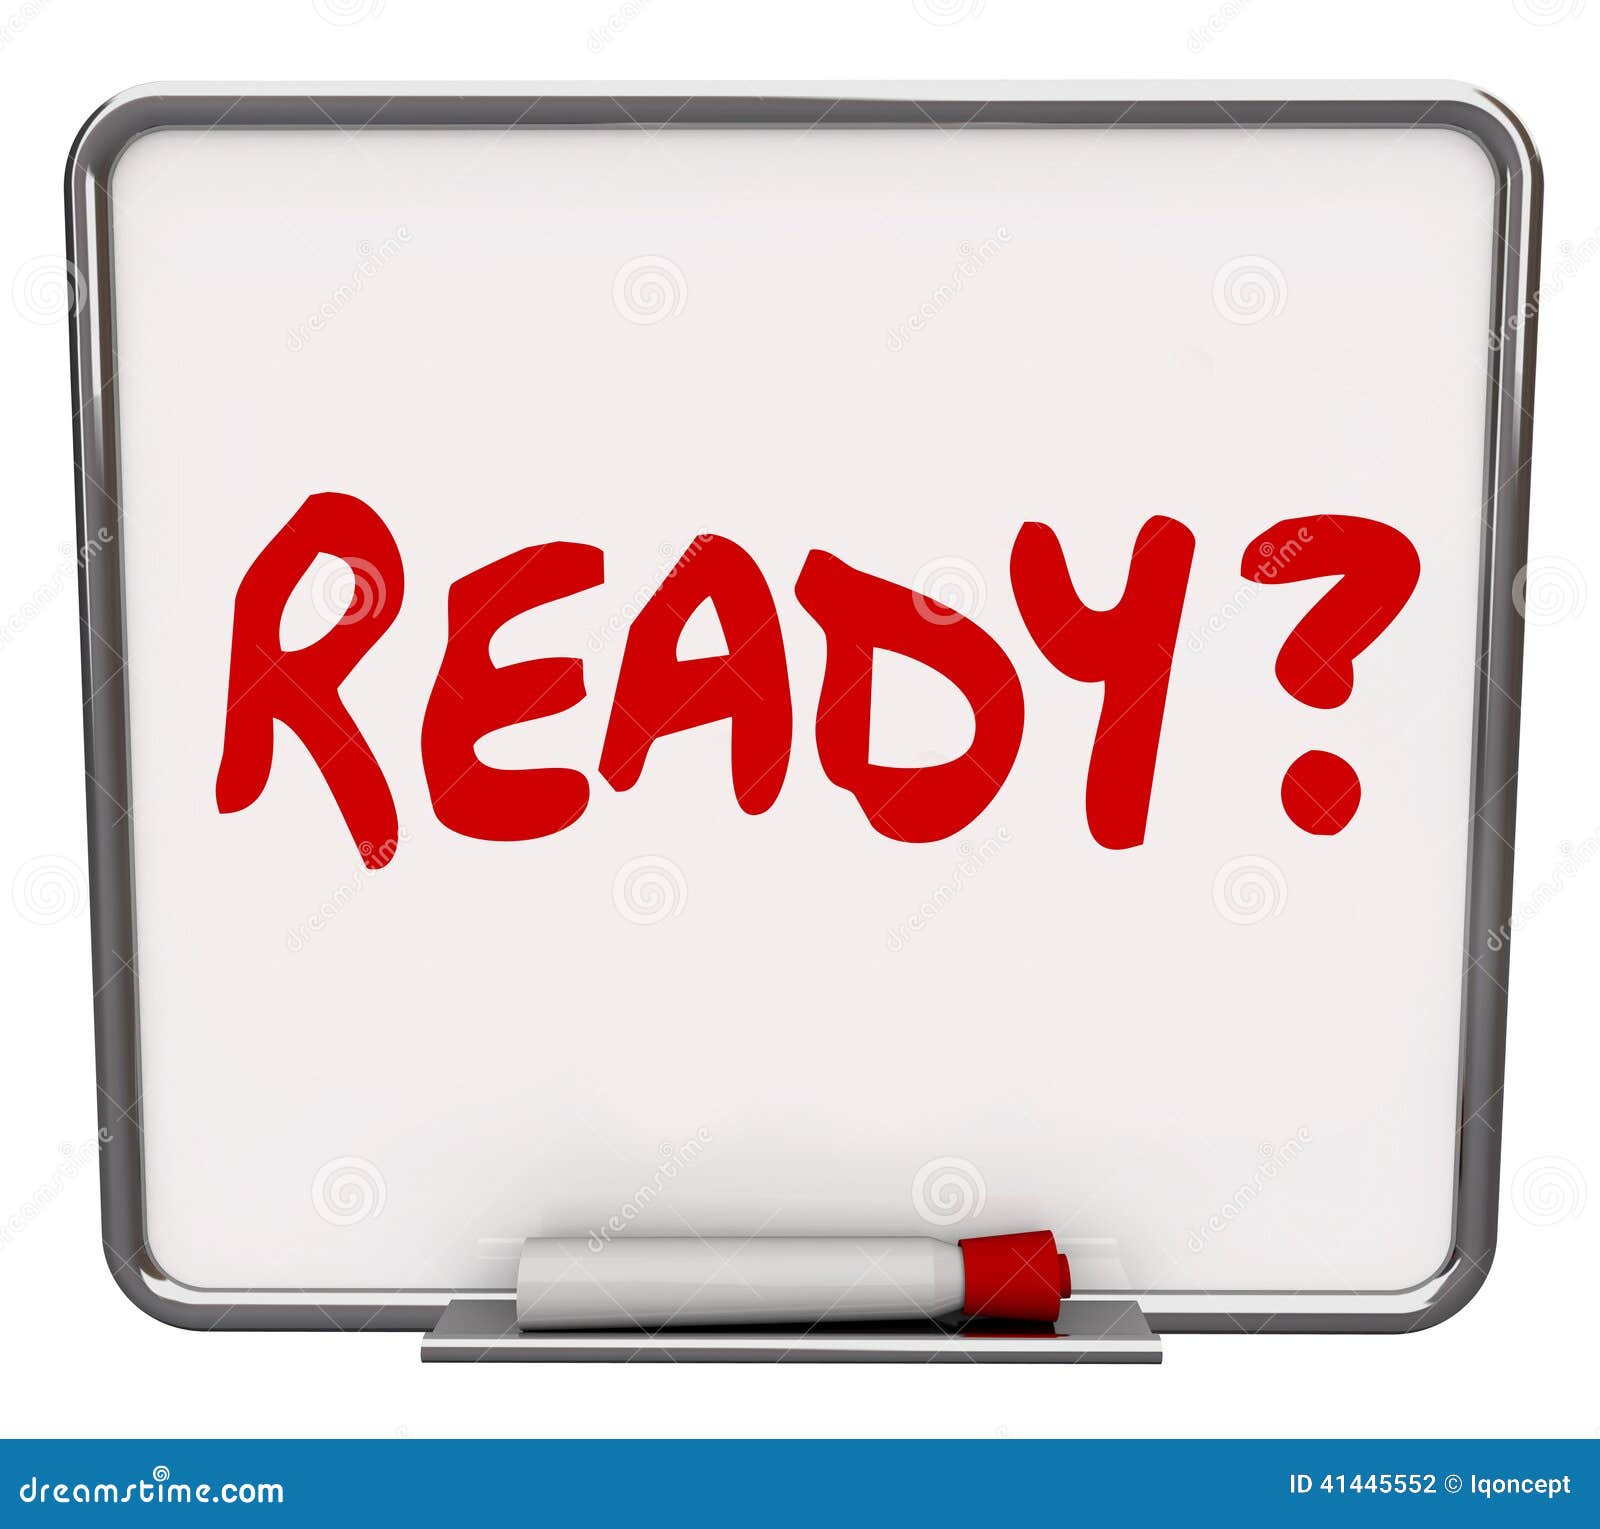 ready word dry erase board prepared question readiness preparation